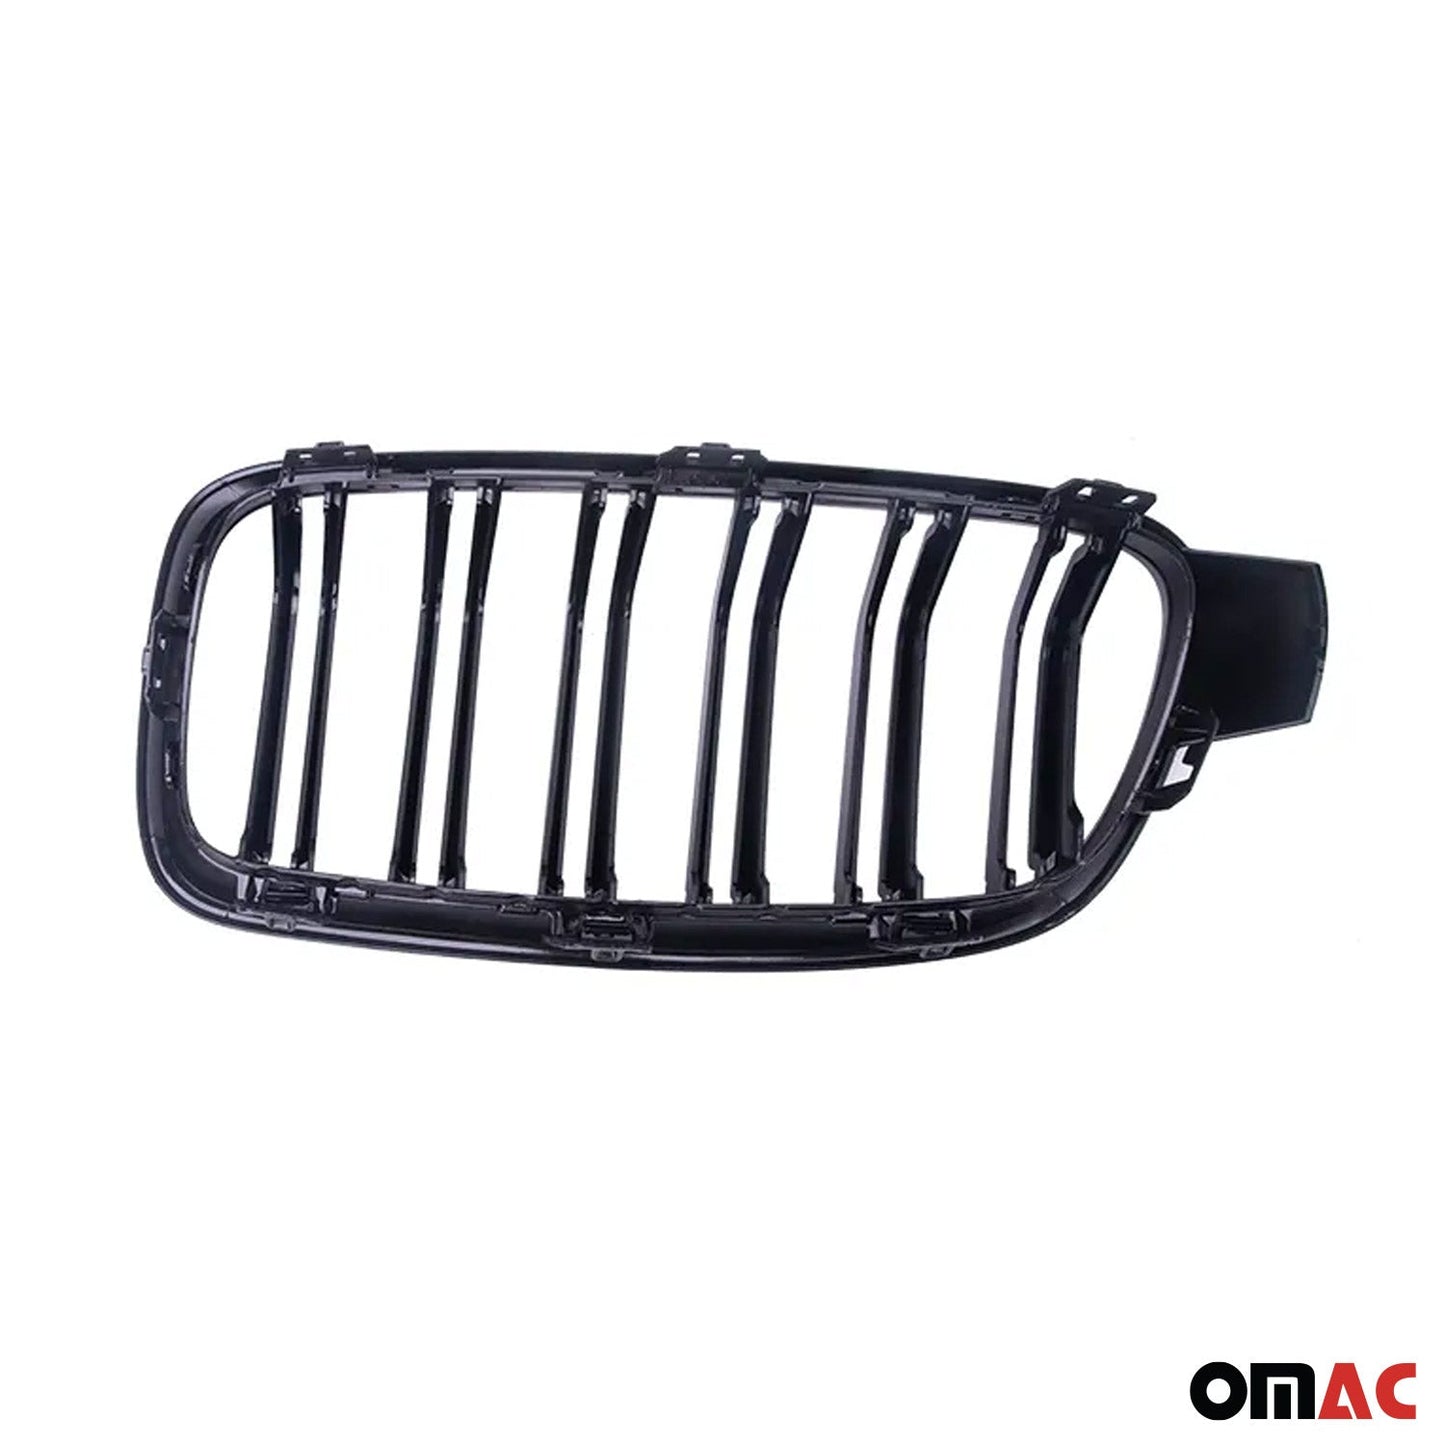 OMAC For BMW F30 F31 2012-2019 Front Kidney Grille M-Tech Gloss Black Single Slat 1204P085MTPB